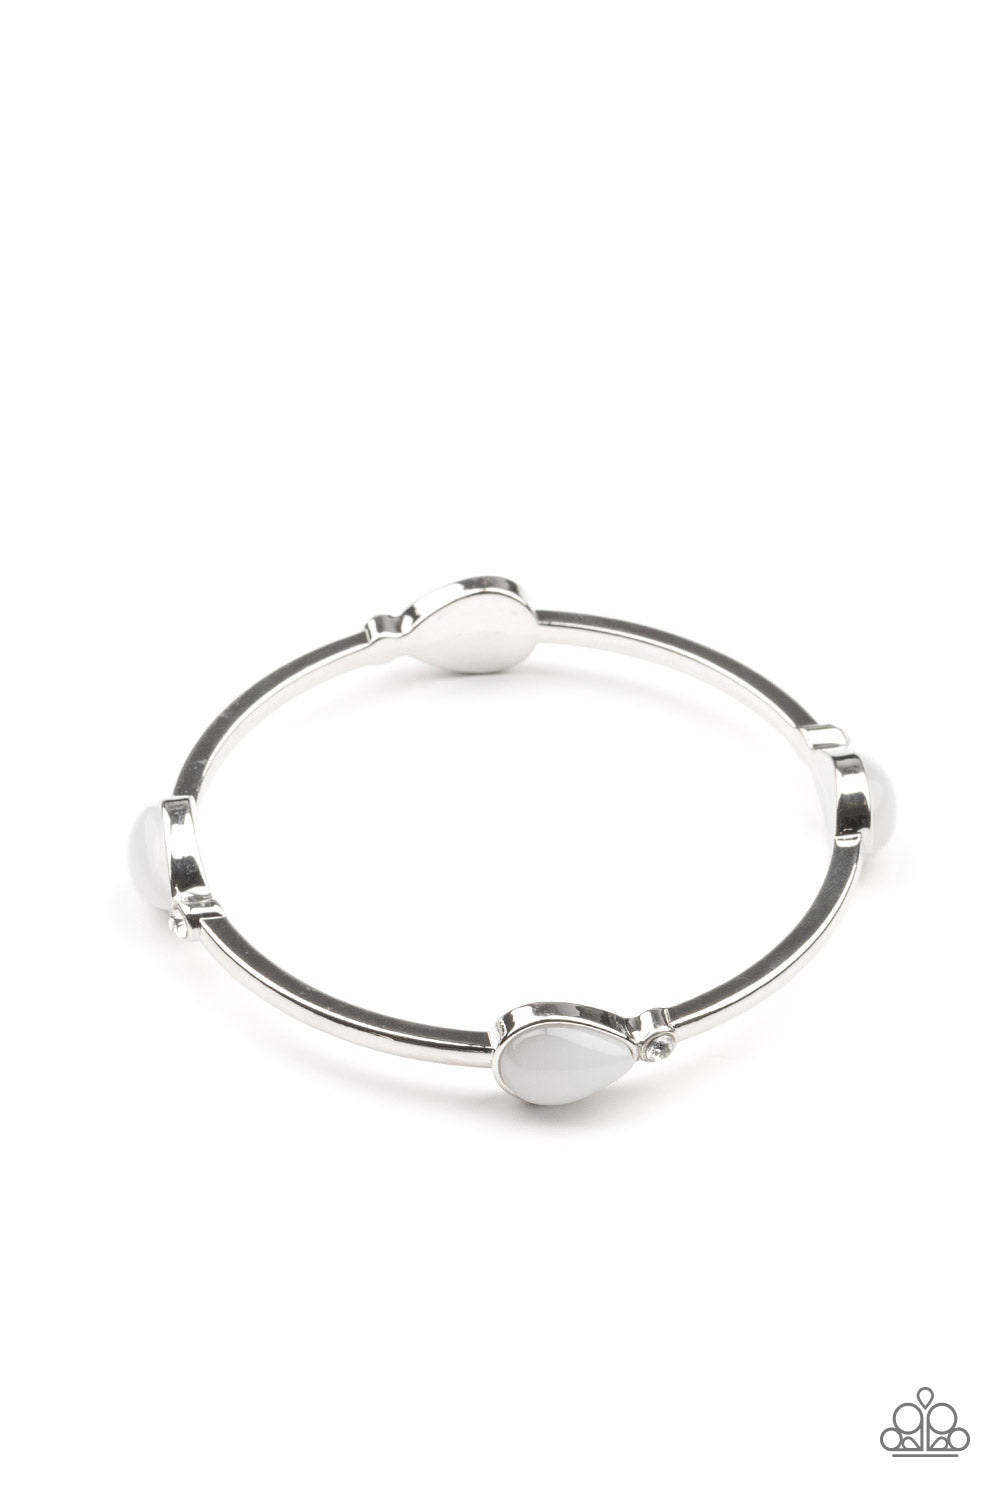 Dewdrop Dancing - White bracelet 2225